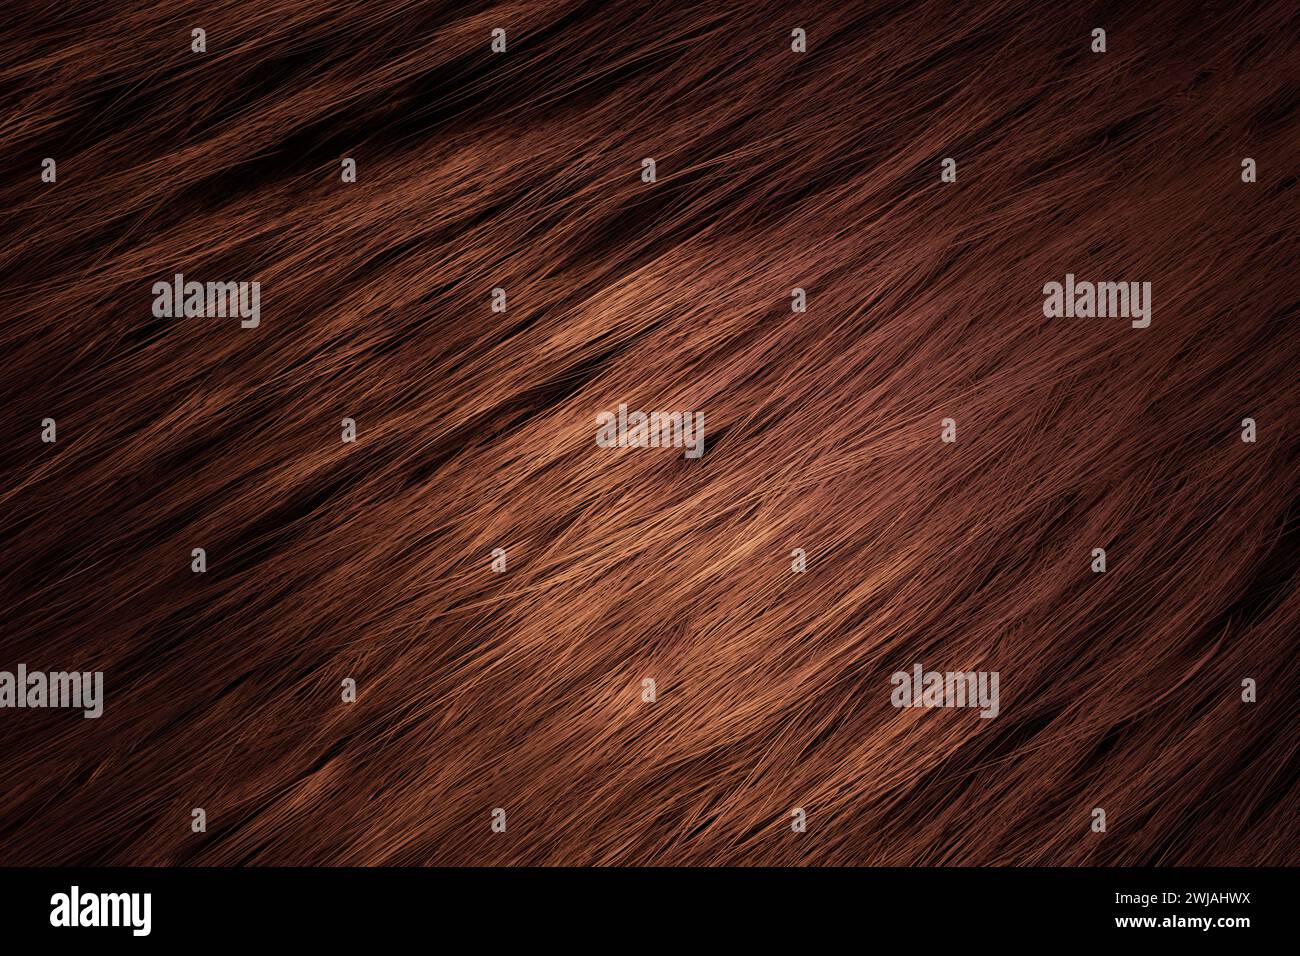 close-up chestnut female hair texture Stock Photo